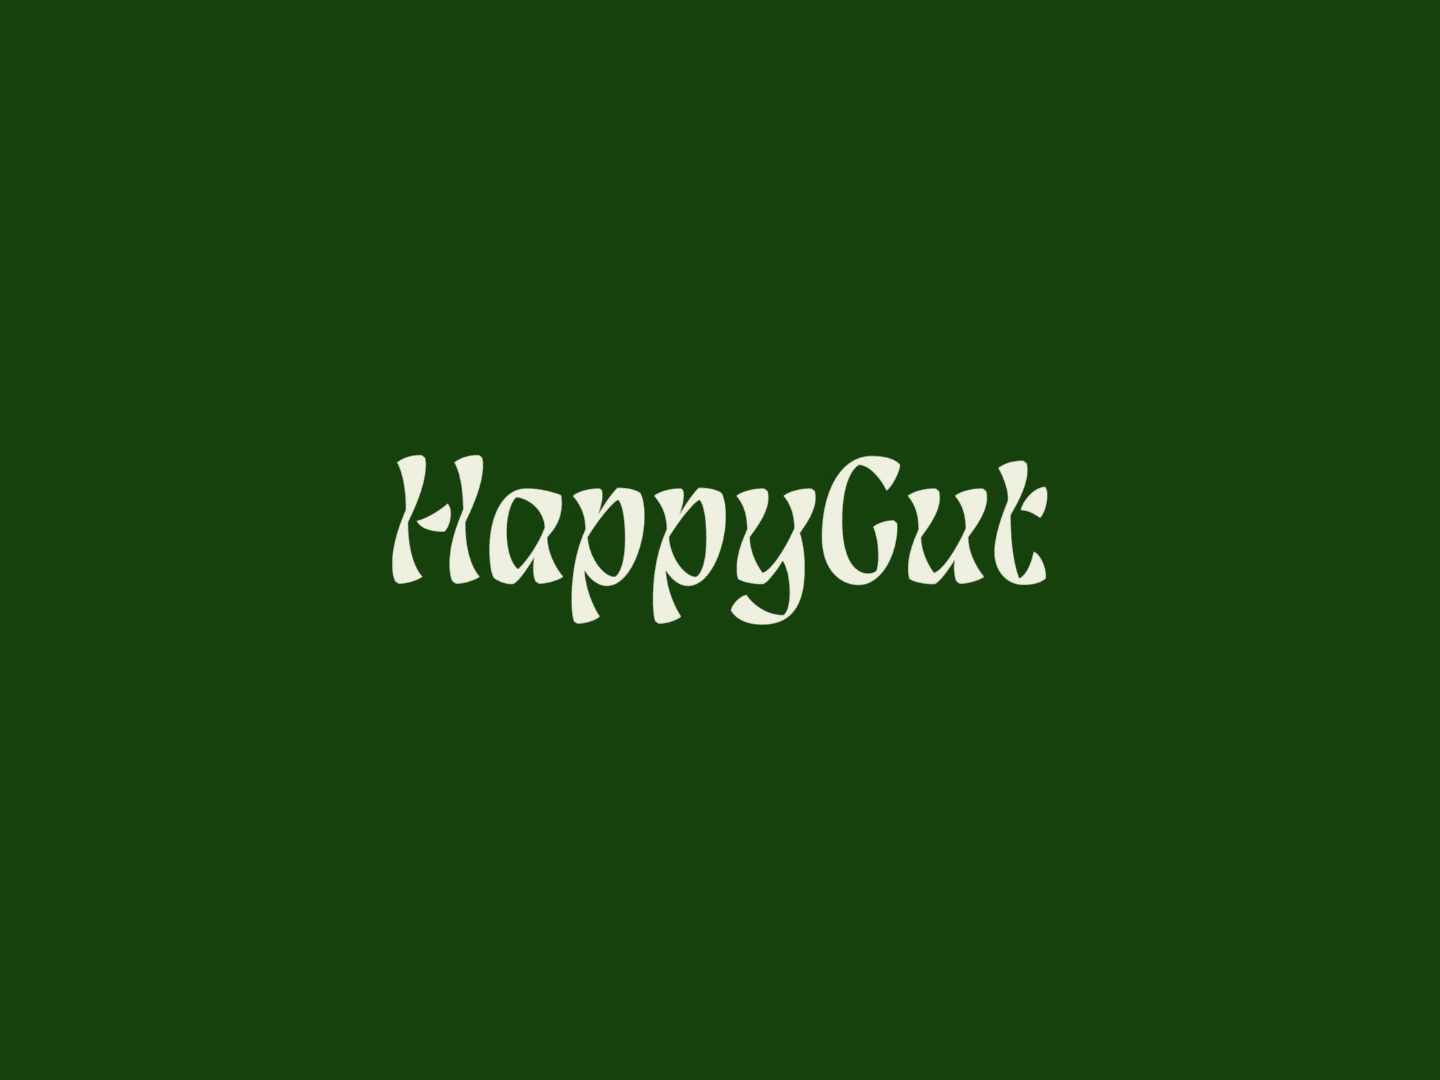 HappyGut